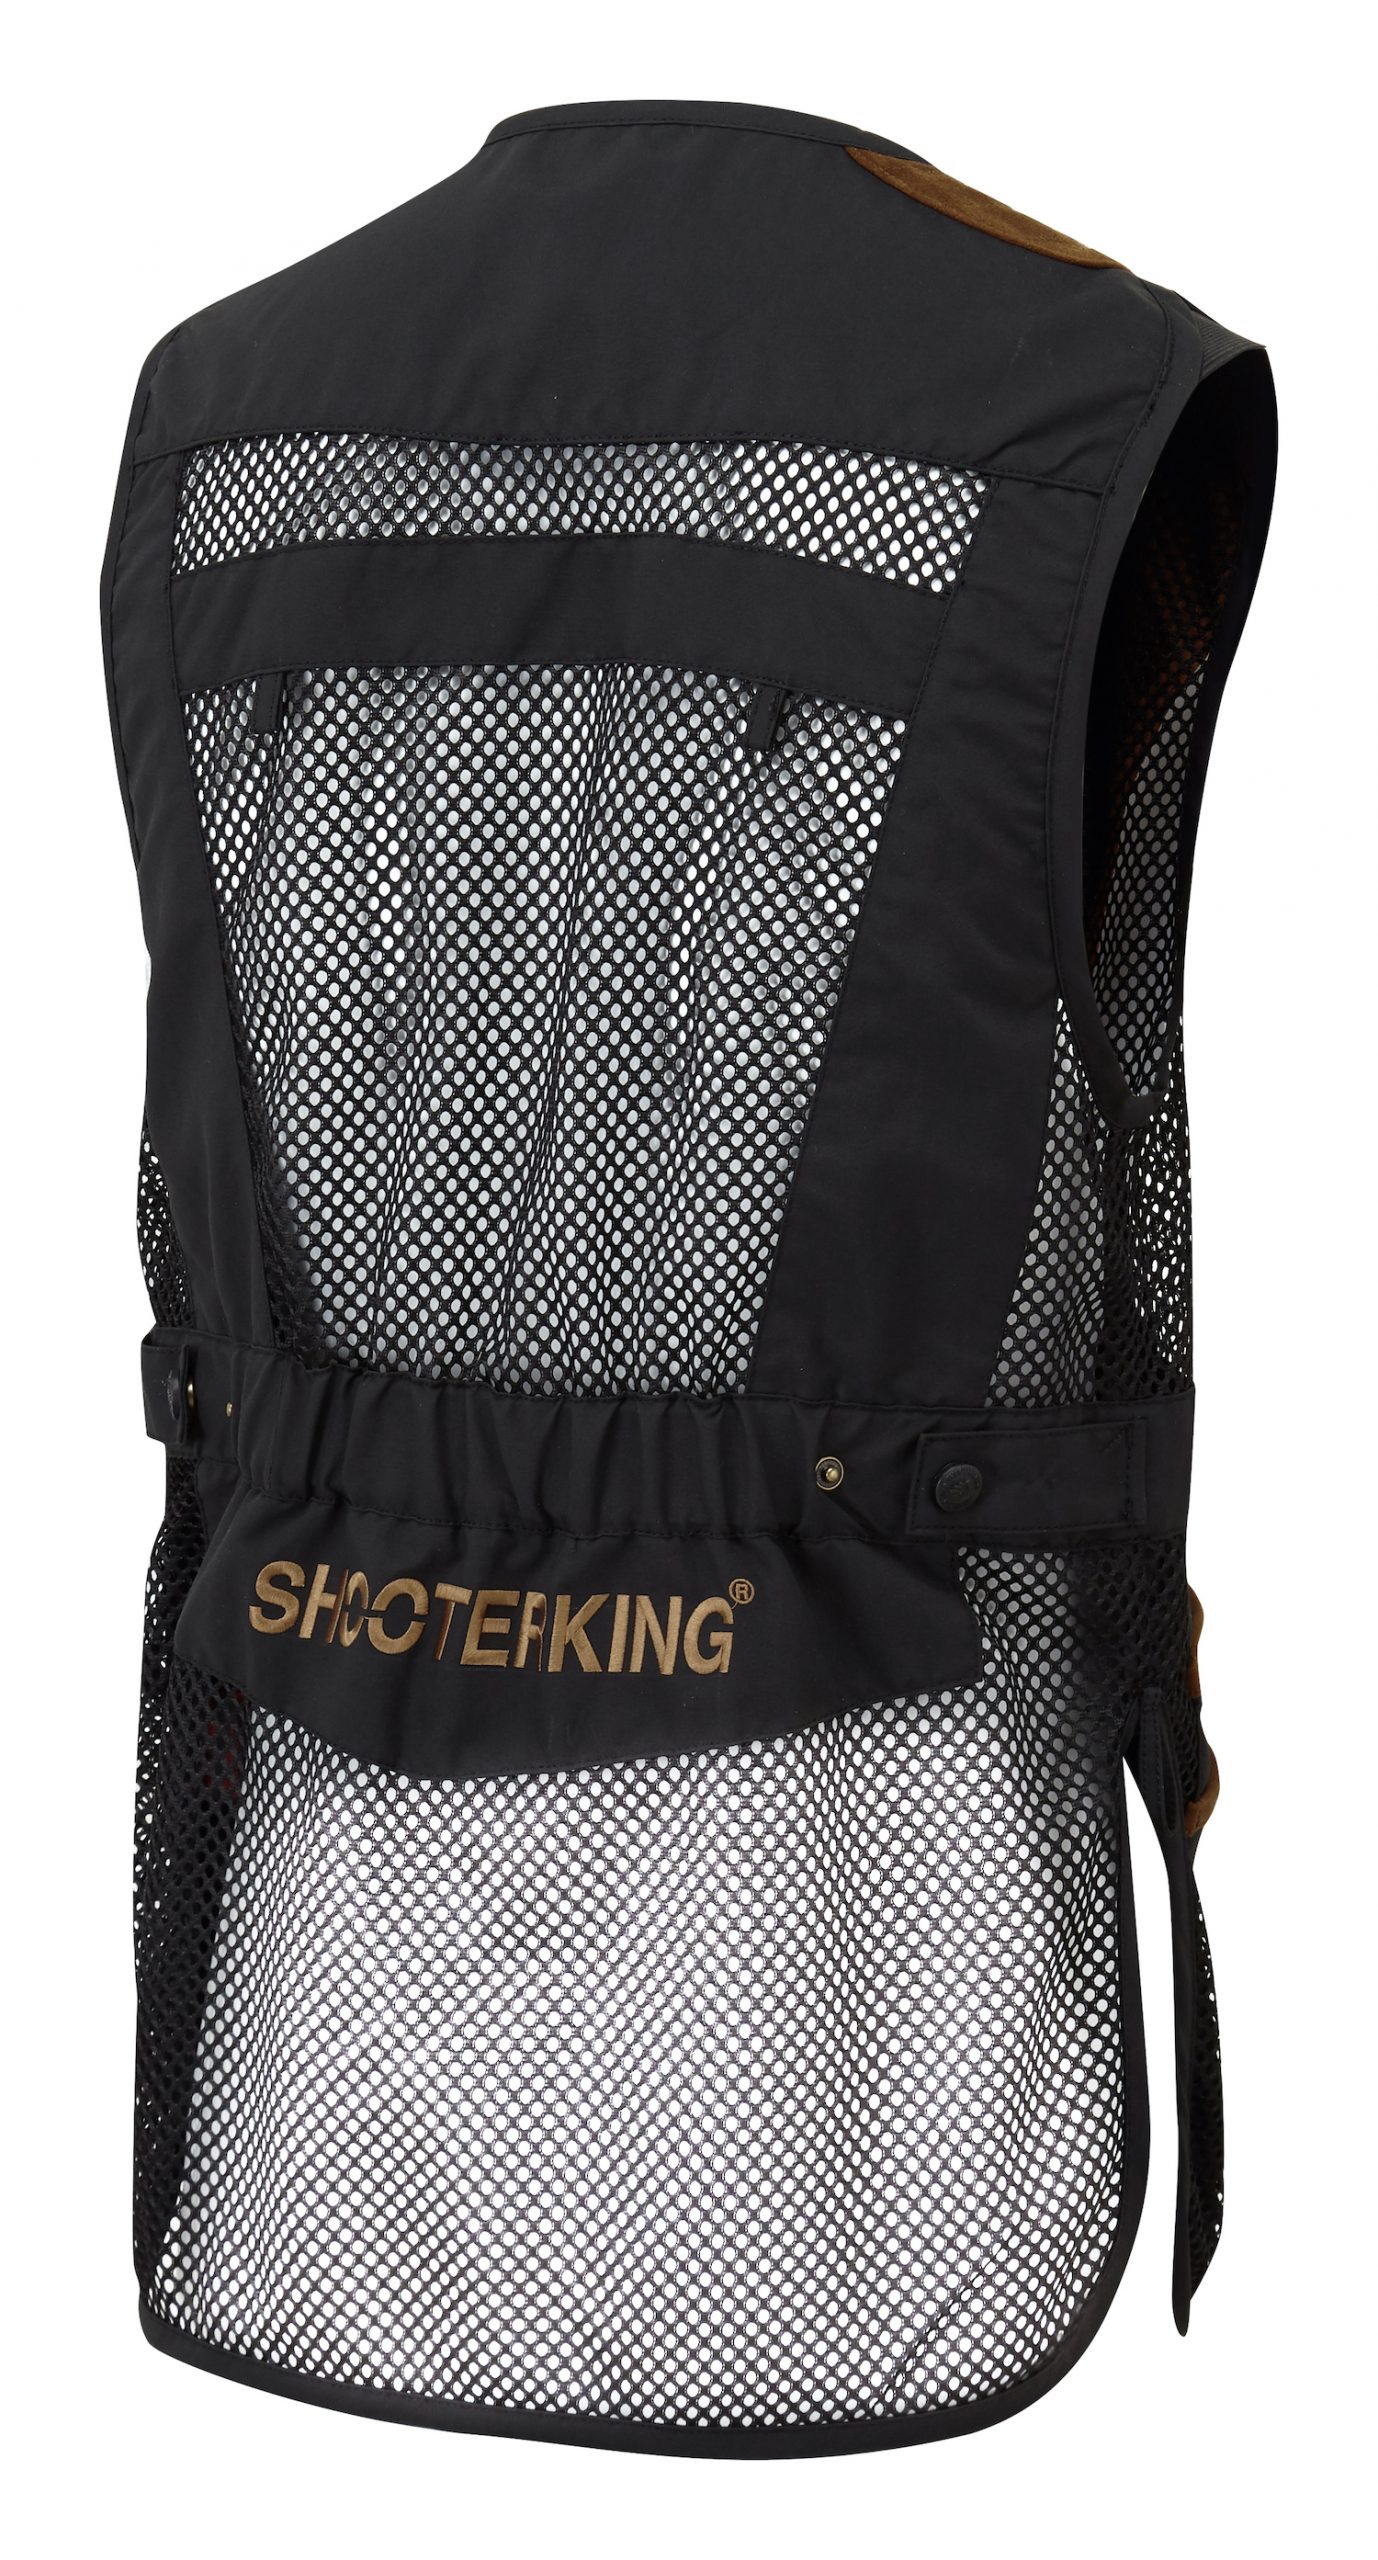 Shooter King Summer Vest